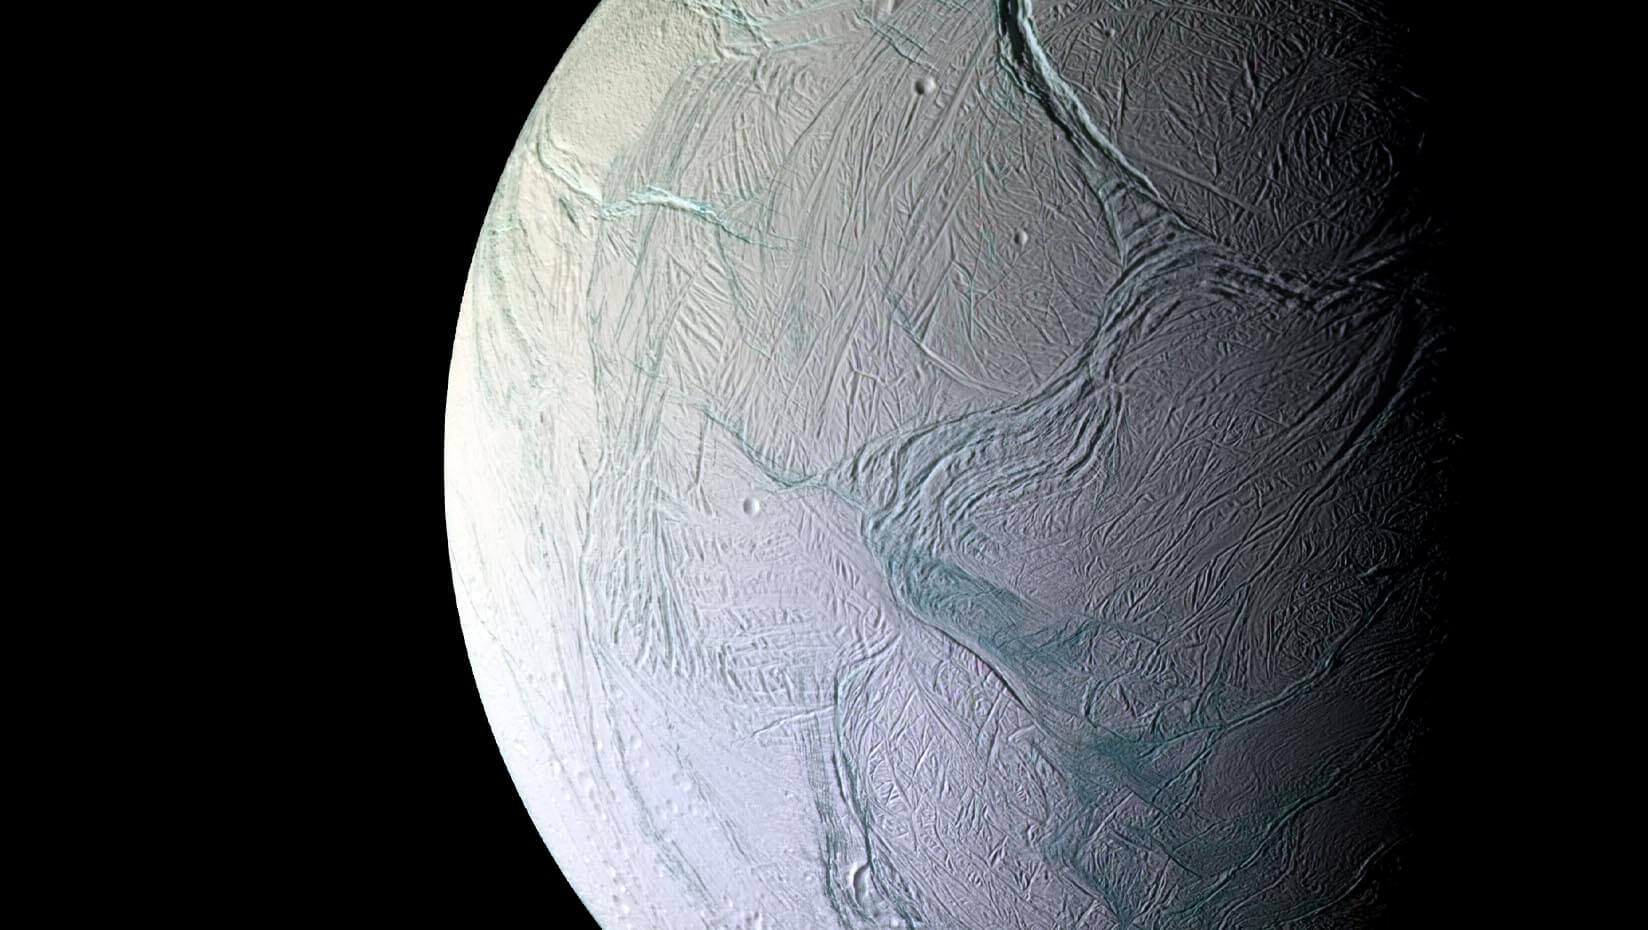 A photo of Saturn's moon Enceladus